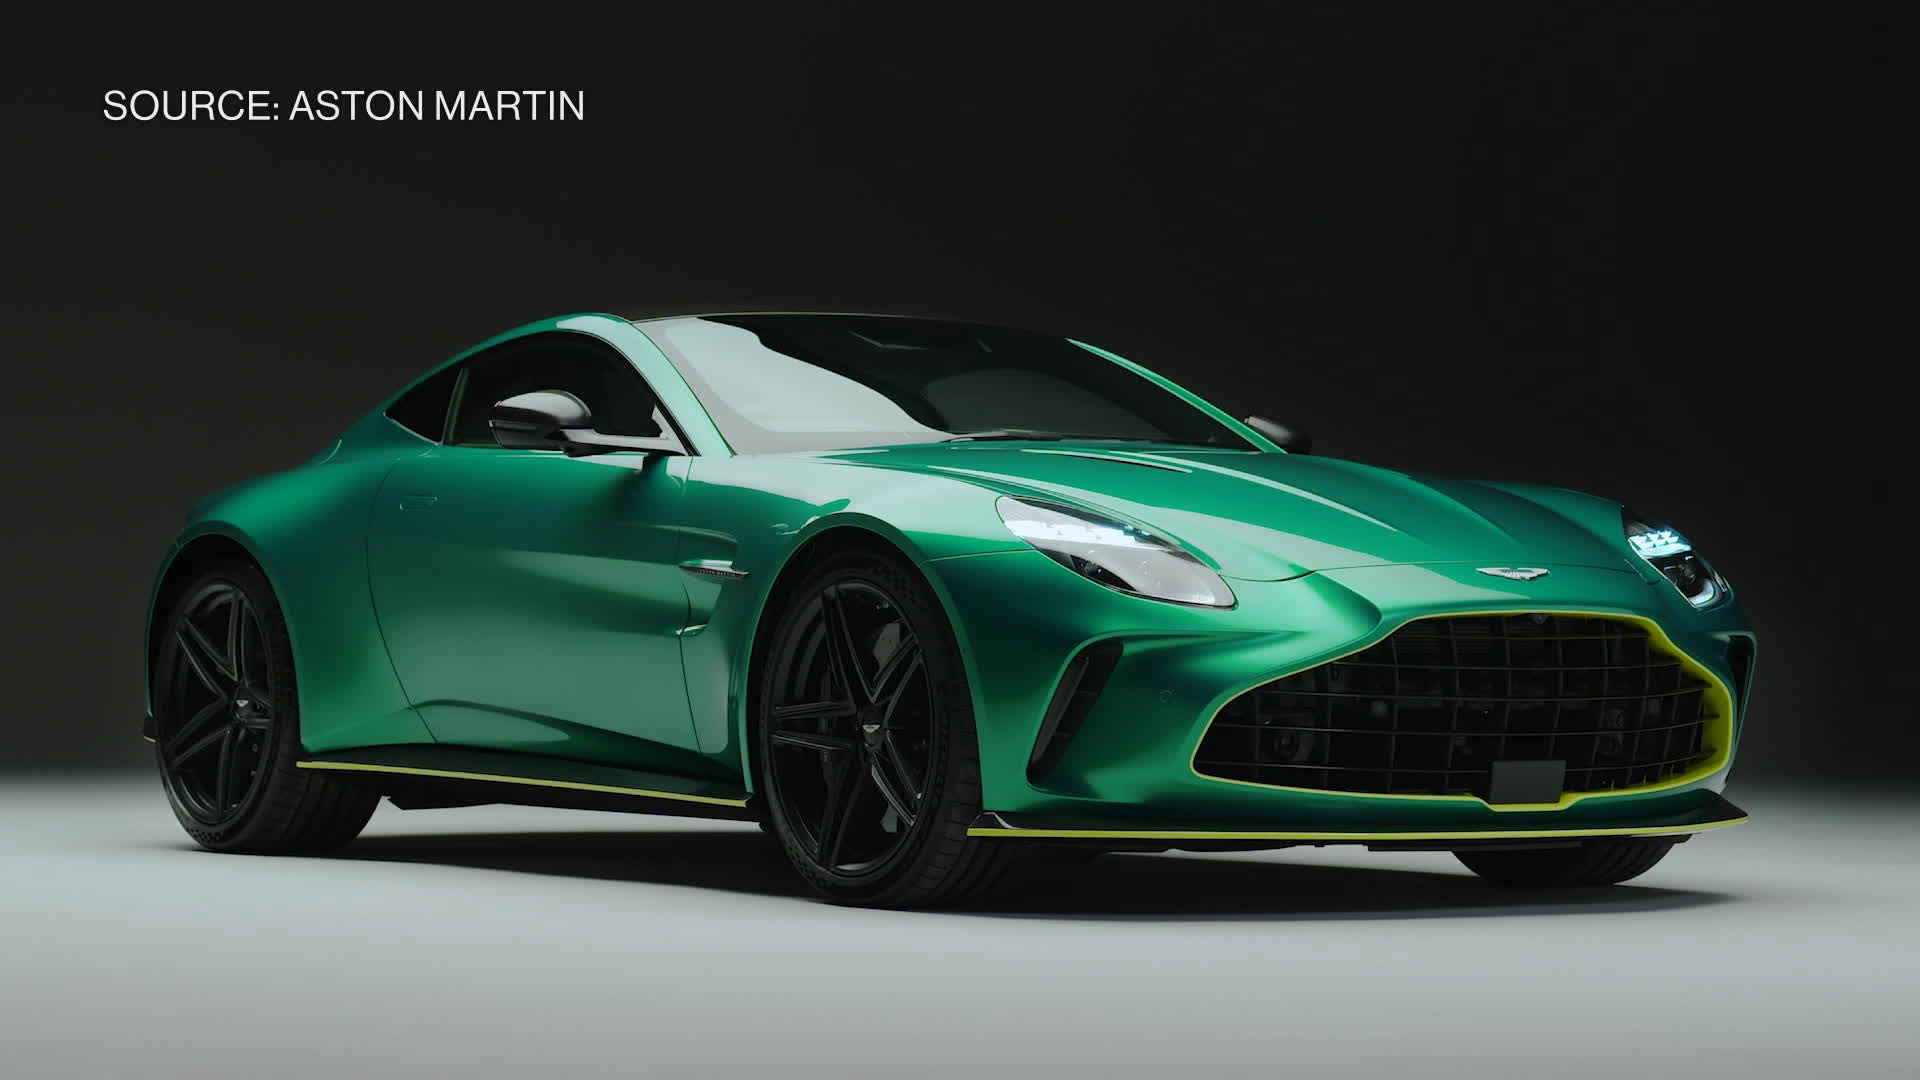 Aston Martin F1 Team's £1 Billion Valuation in Caps Racing Hype - Bloomberg